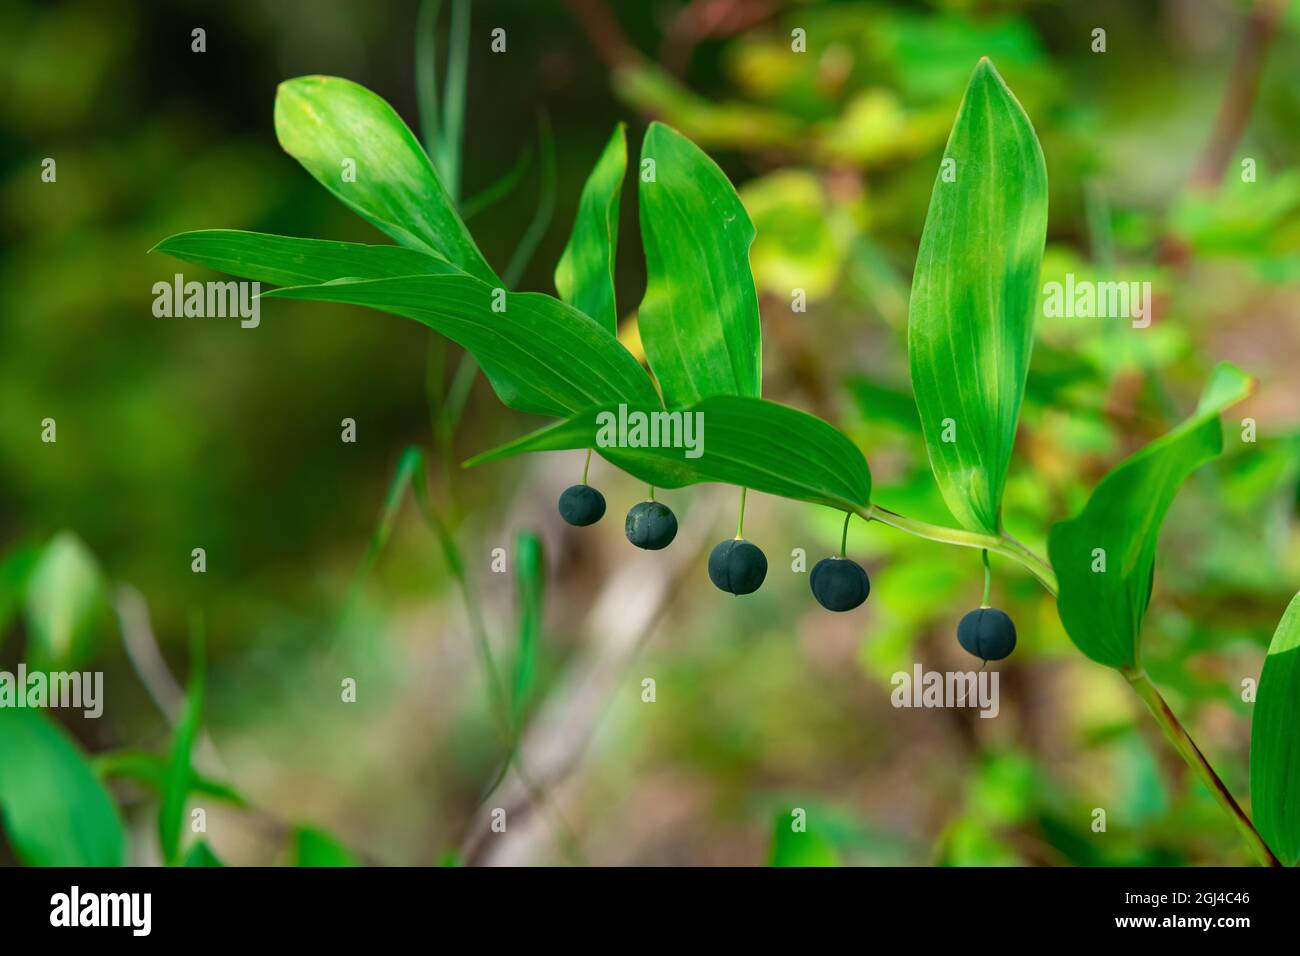 Planta Sello Salomón (Polygonatum odoratum) con frutos Fotografía de stock  - Alamy